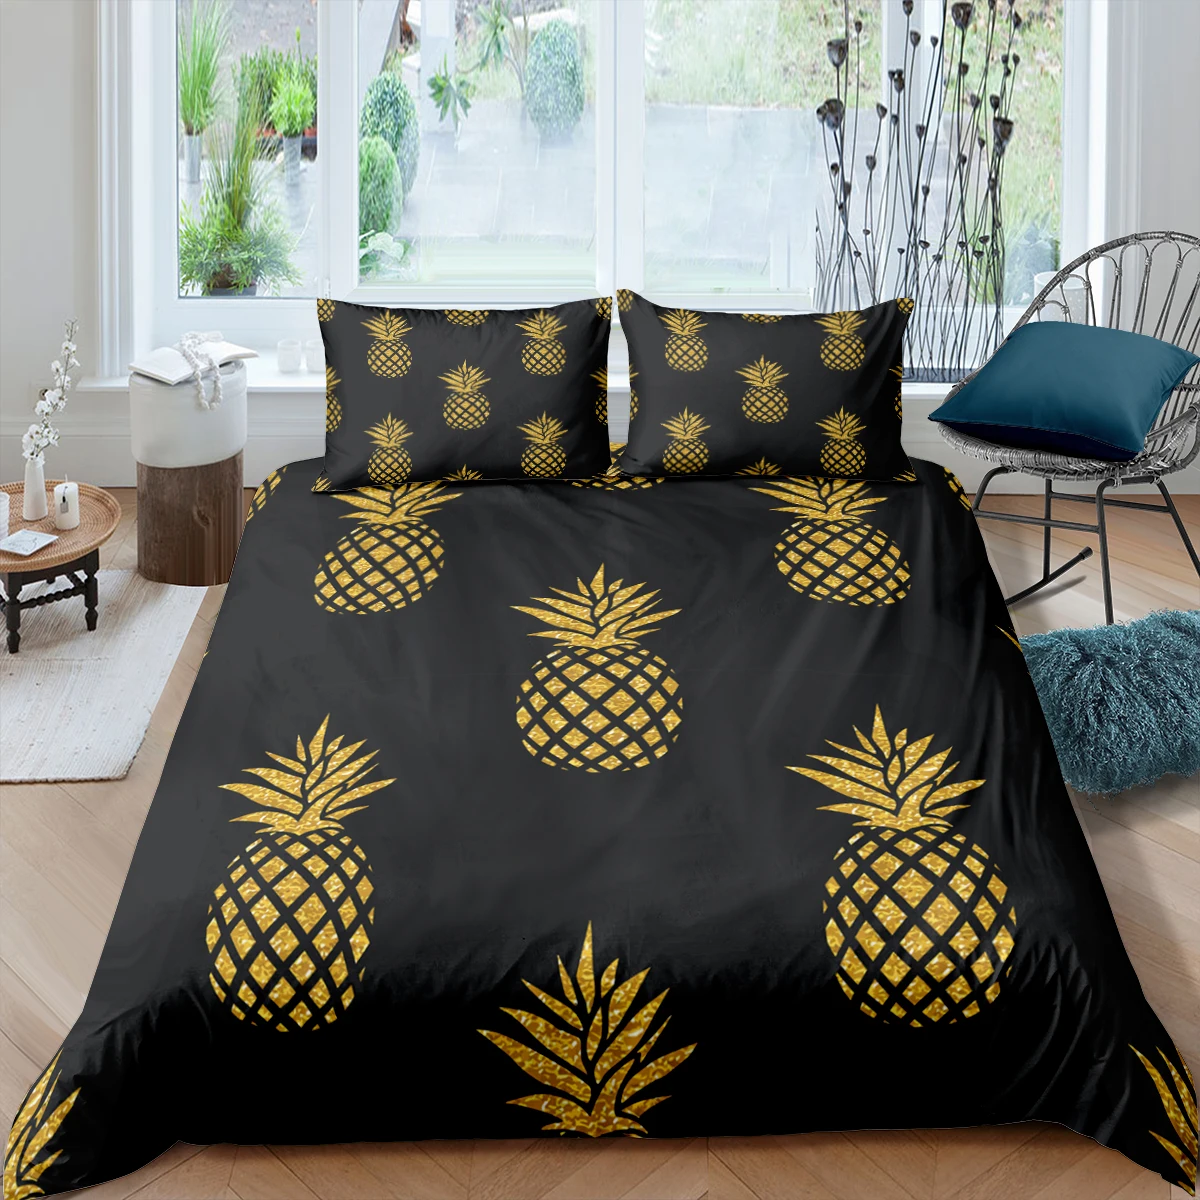 white comforter Home Textiles Luxury 3D Golden Pineapple Duvet Cover Set Pillowcase Fruit Bedding Set AU/EU/UK/US Queen and King Size Sets bedspread